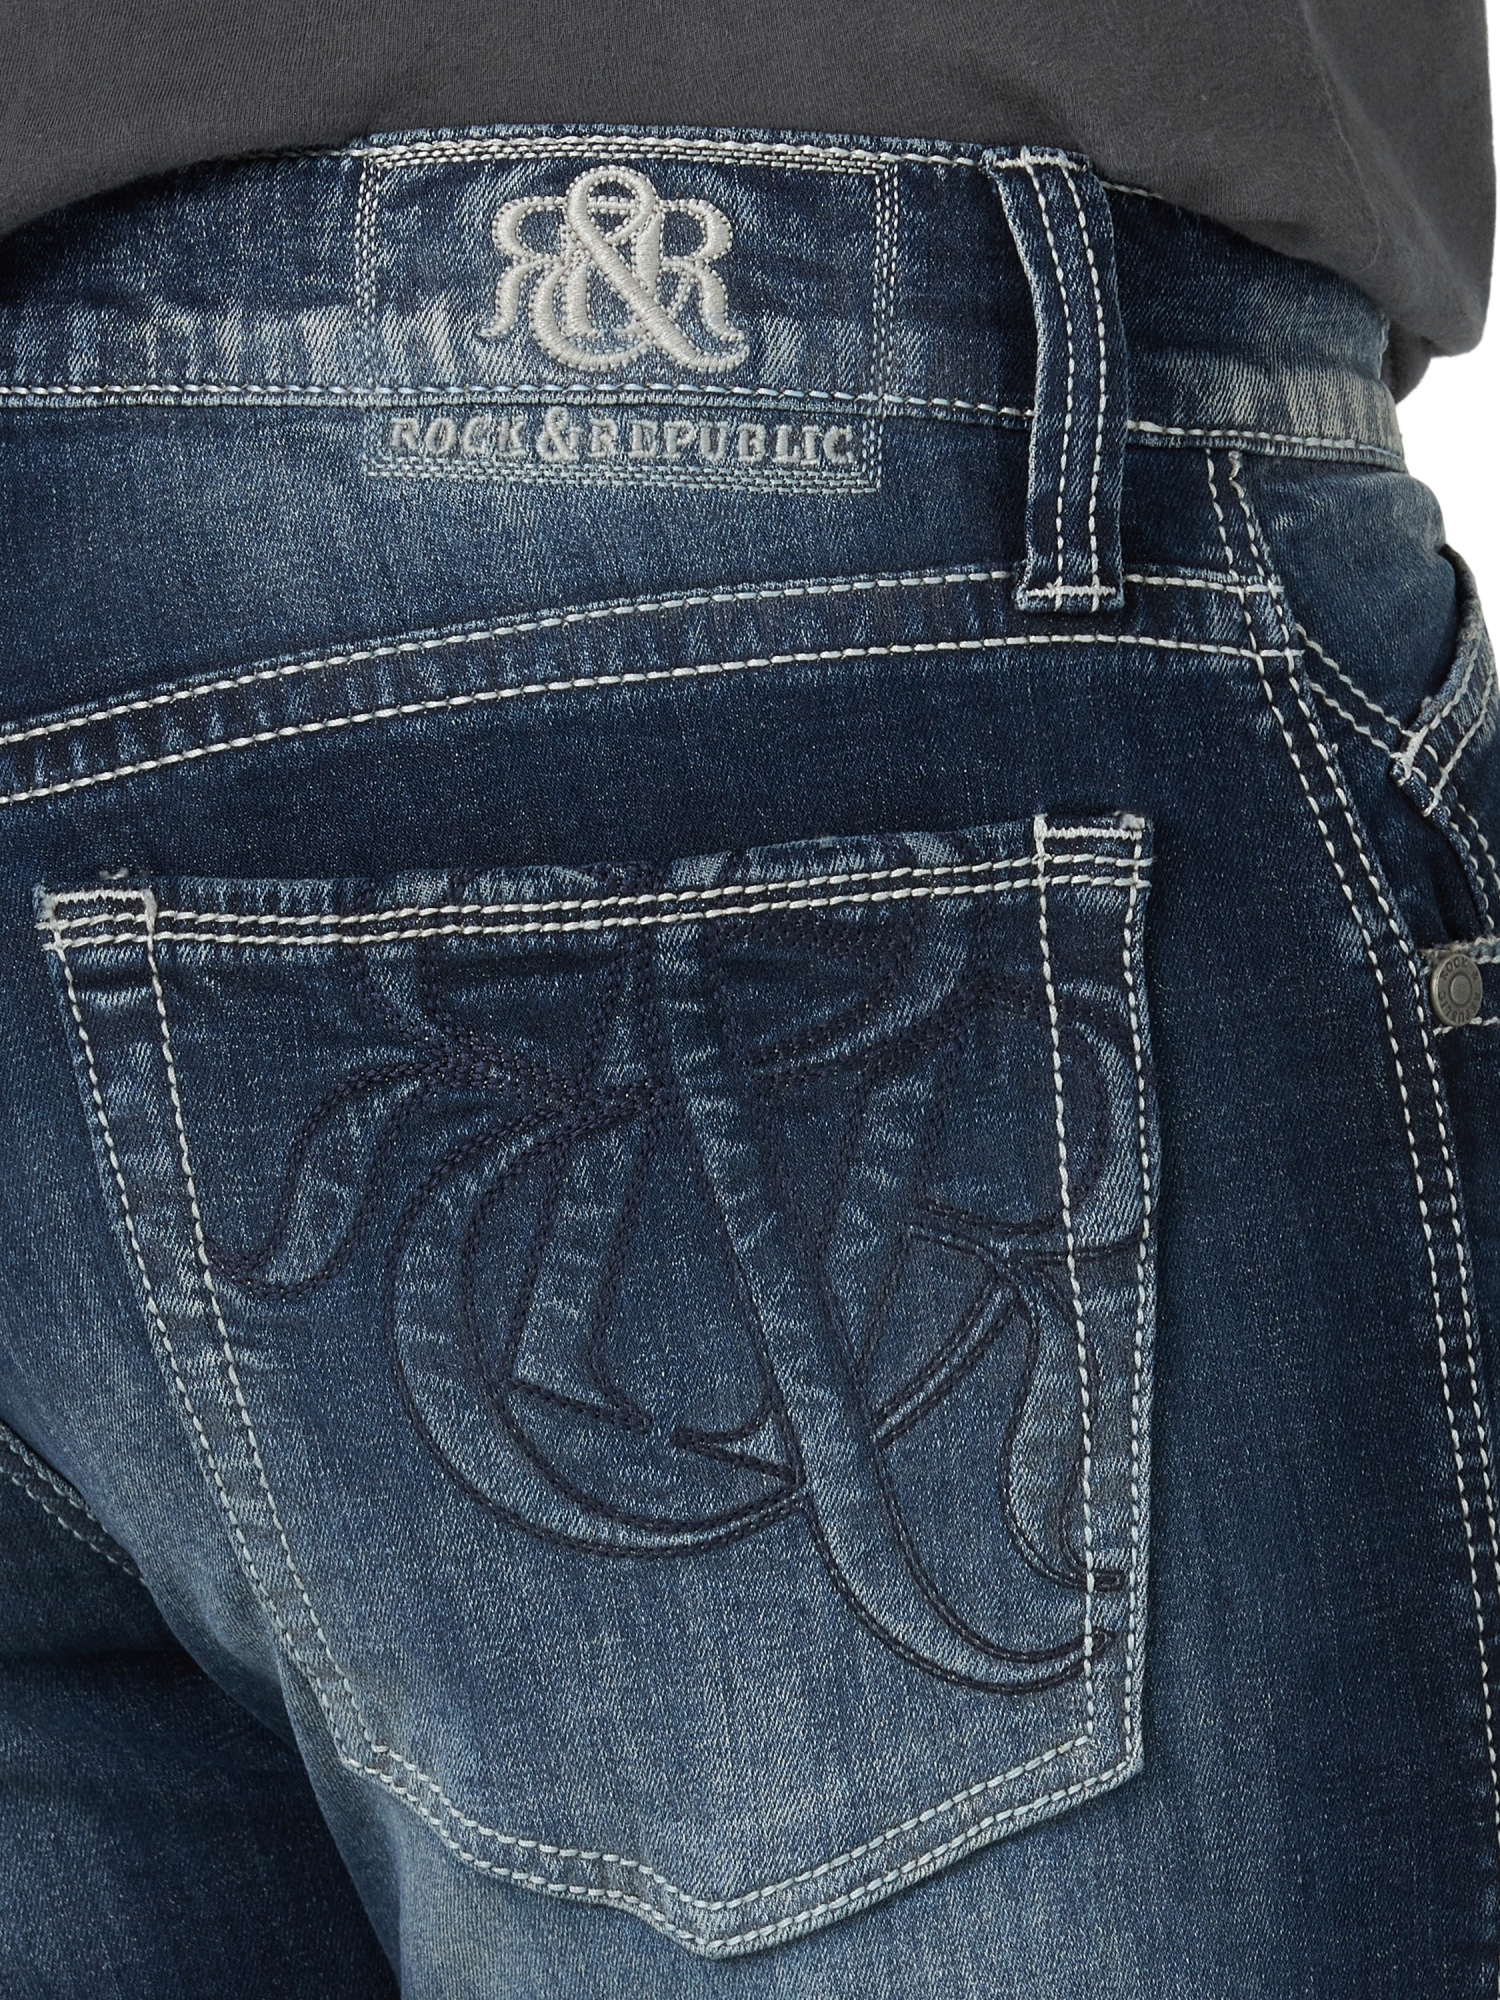 Rock & Republic Men's Slim Straight Jean with Ultra Comfort Denim - image 5 of 6